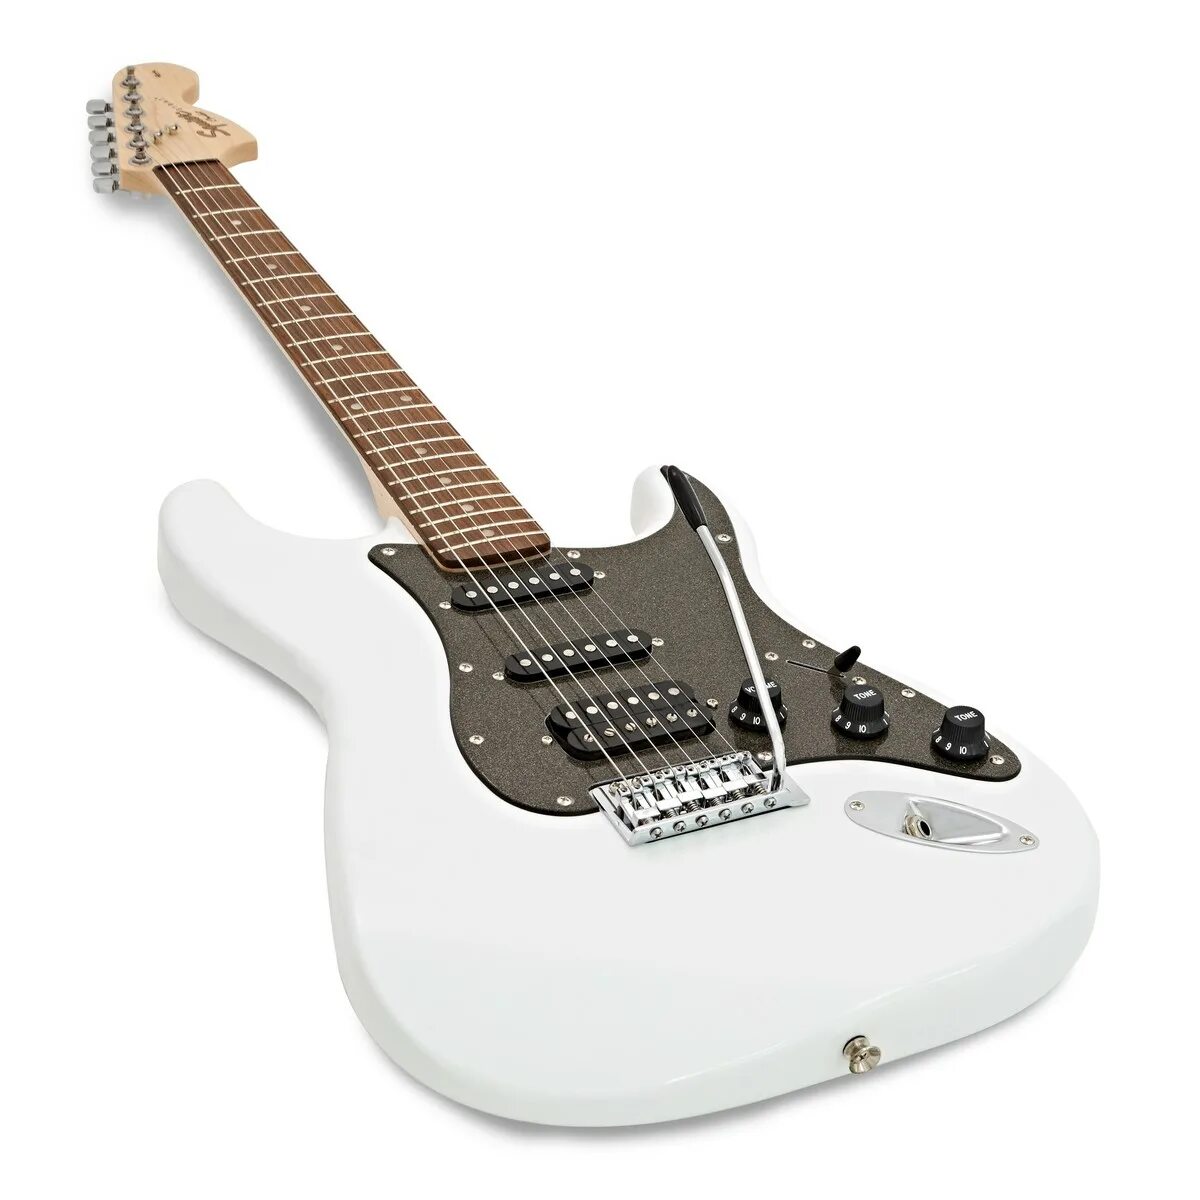 Squier affinity stratocaster. Fender Stratocaster Affinity Olympic White. Affinity Stratocaster 2021. Squier Affinity Stratocaster White. Squier Affinity Strat White.